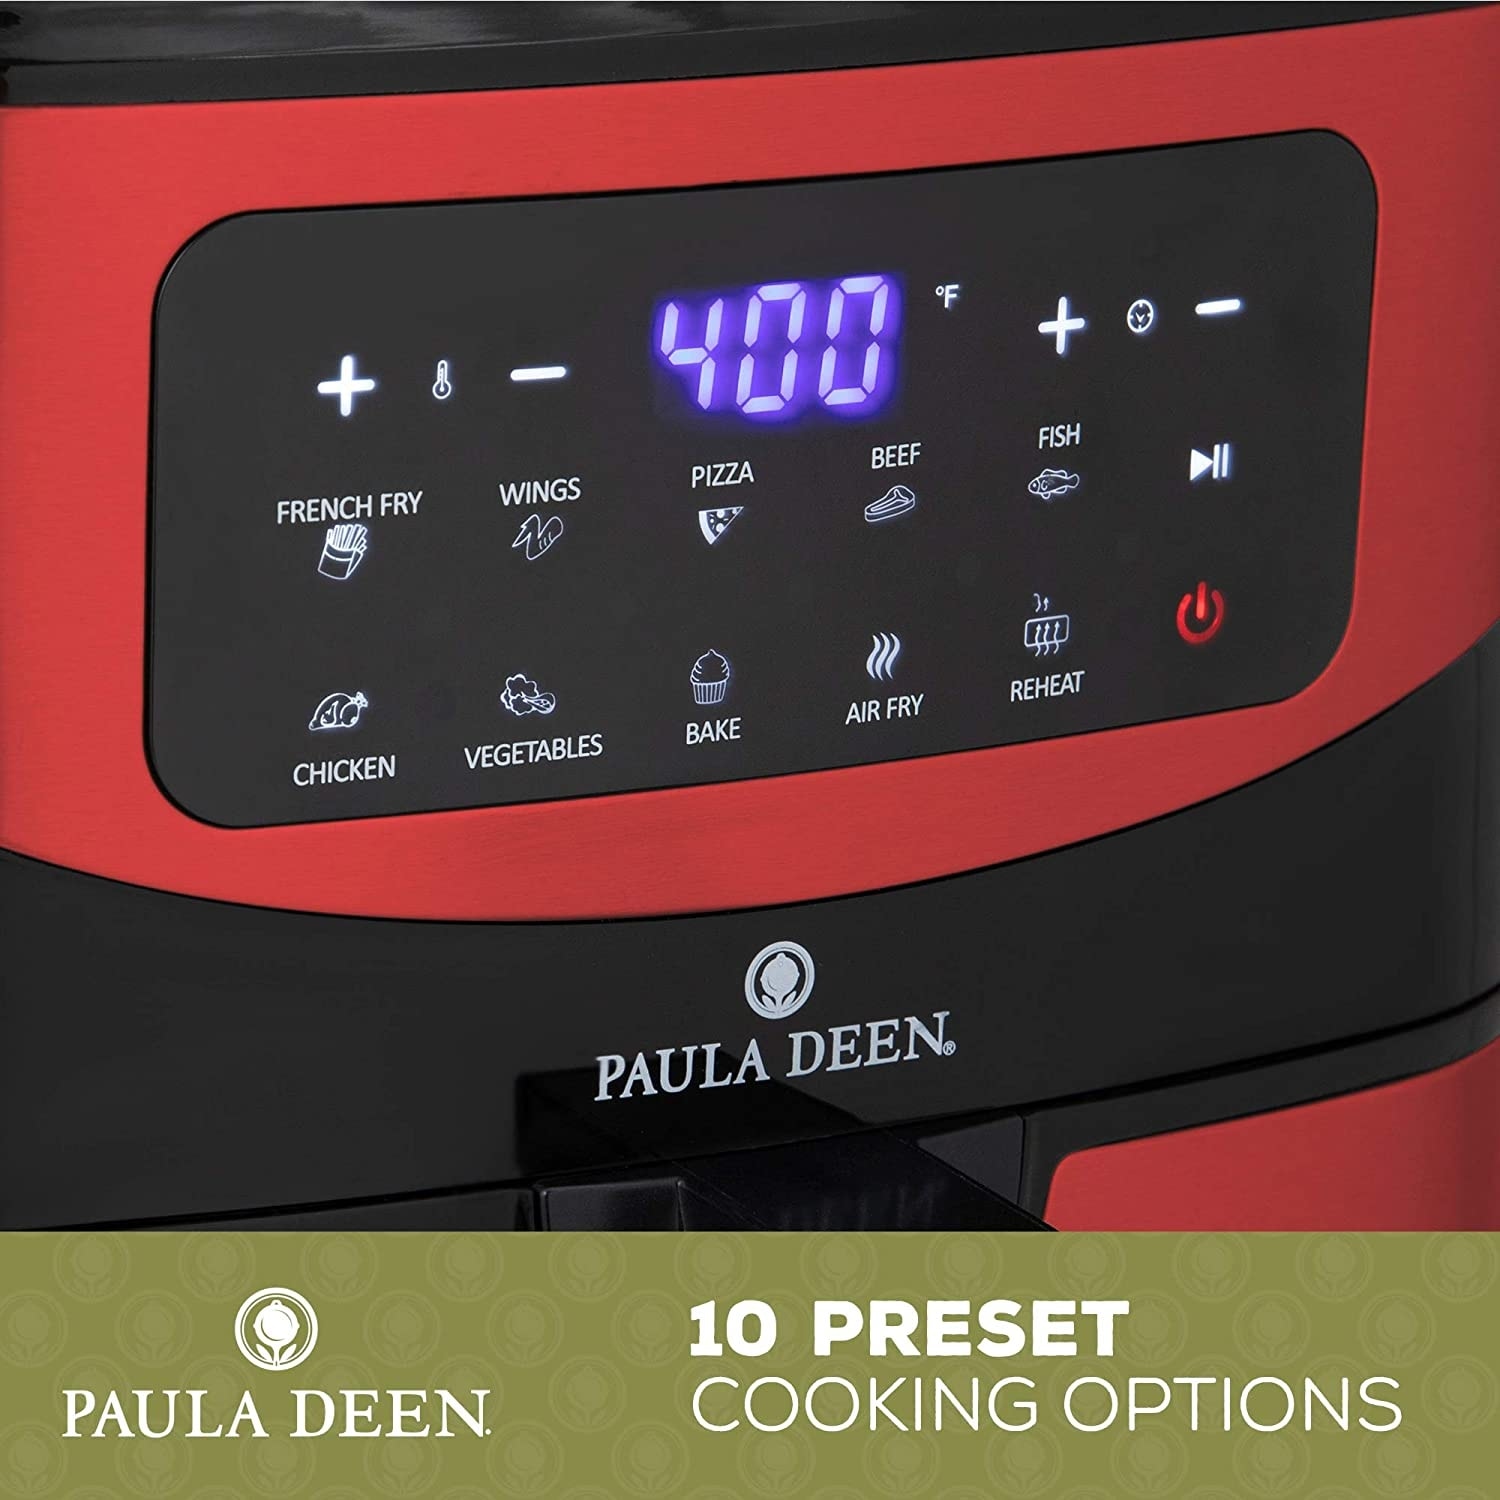 Paula Deen PDKDF579R Stainless Steel 10 QT 1700 Watts Digital LED Display  Air Fryer, Red Stainless